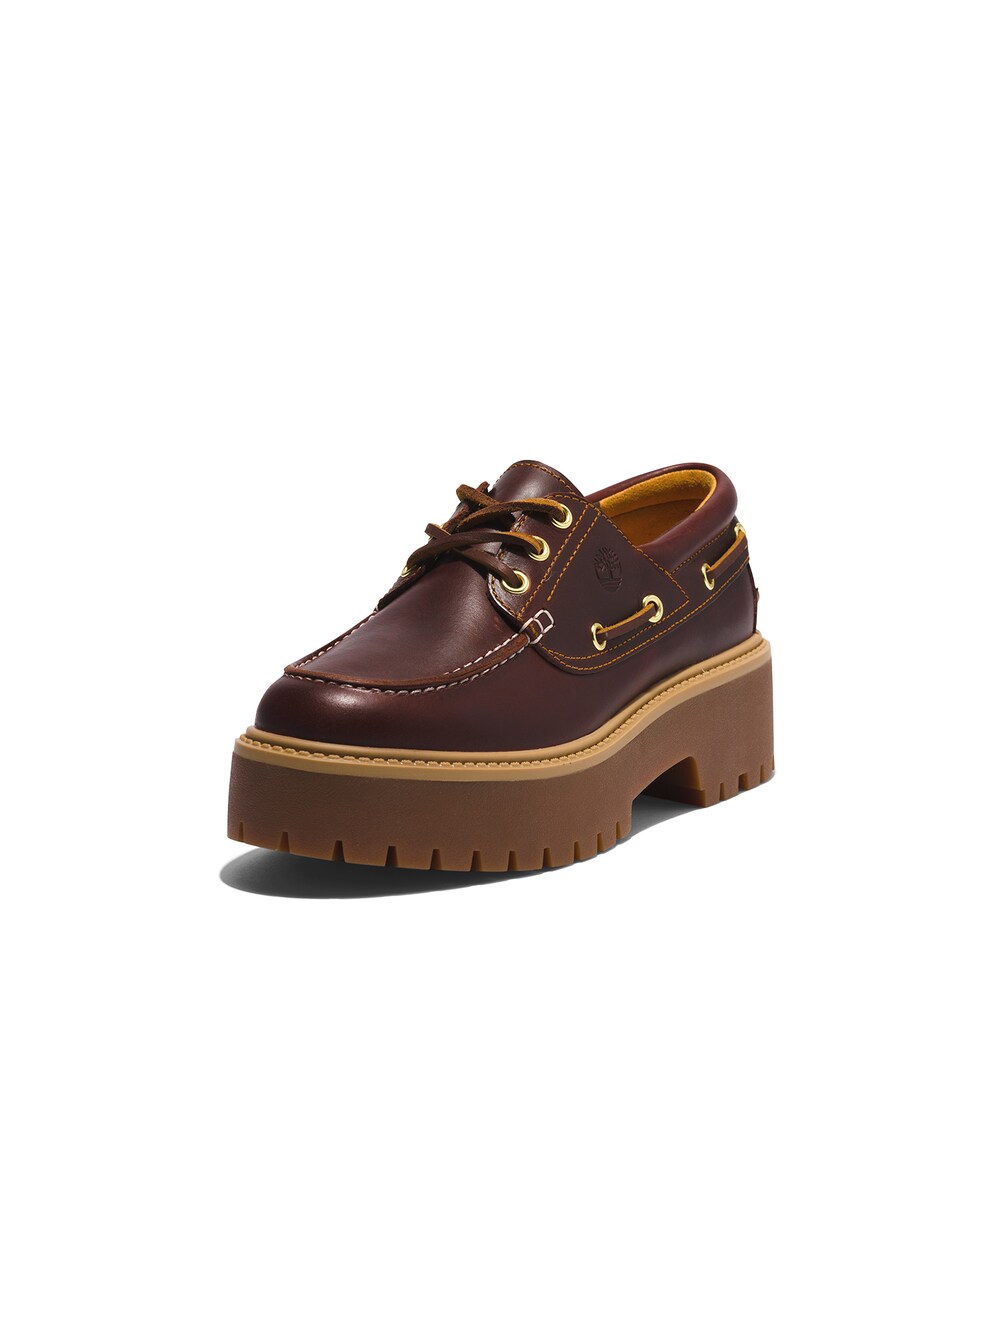 ковролин принт карамель 170 3м коричневый Обувь на шнуровке Timberland Stone Street 3 Eye, коричневый/карамель/темно-коричневый